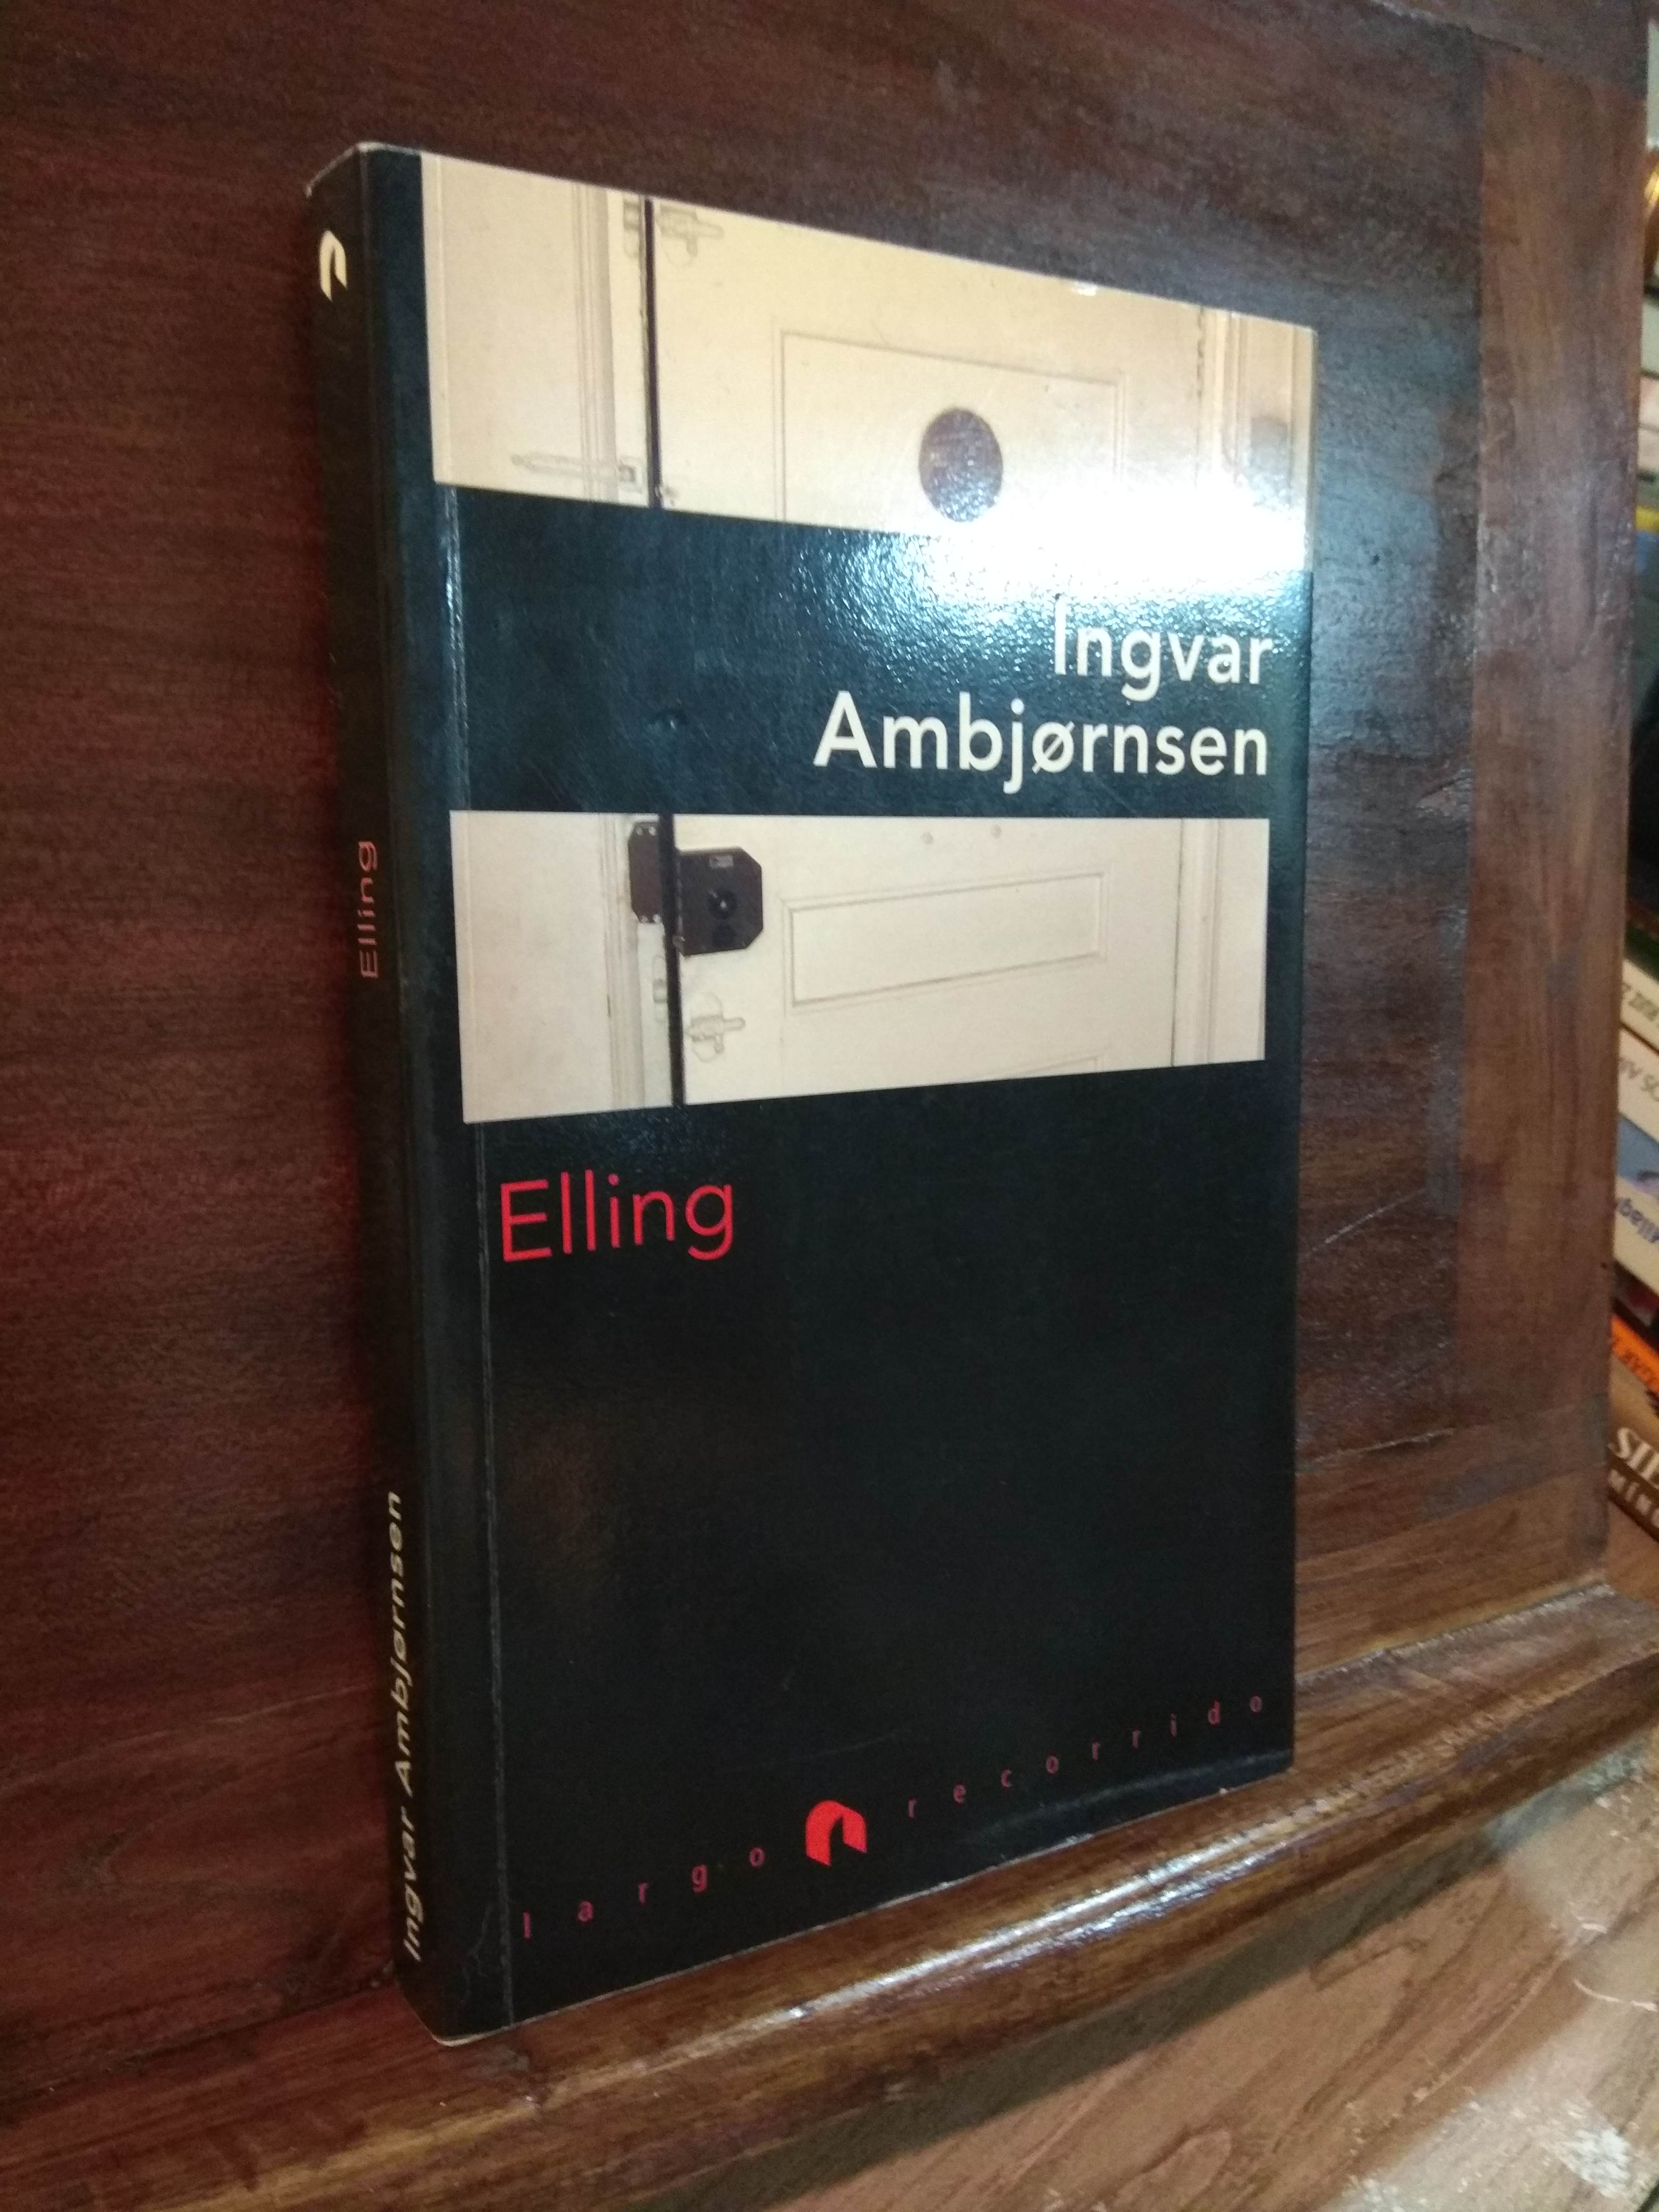 Elling - Ingvar Ambjornsen